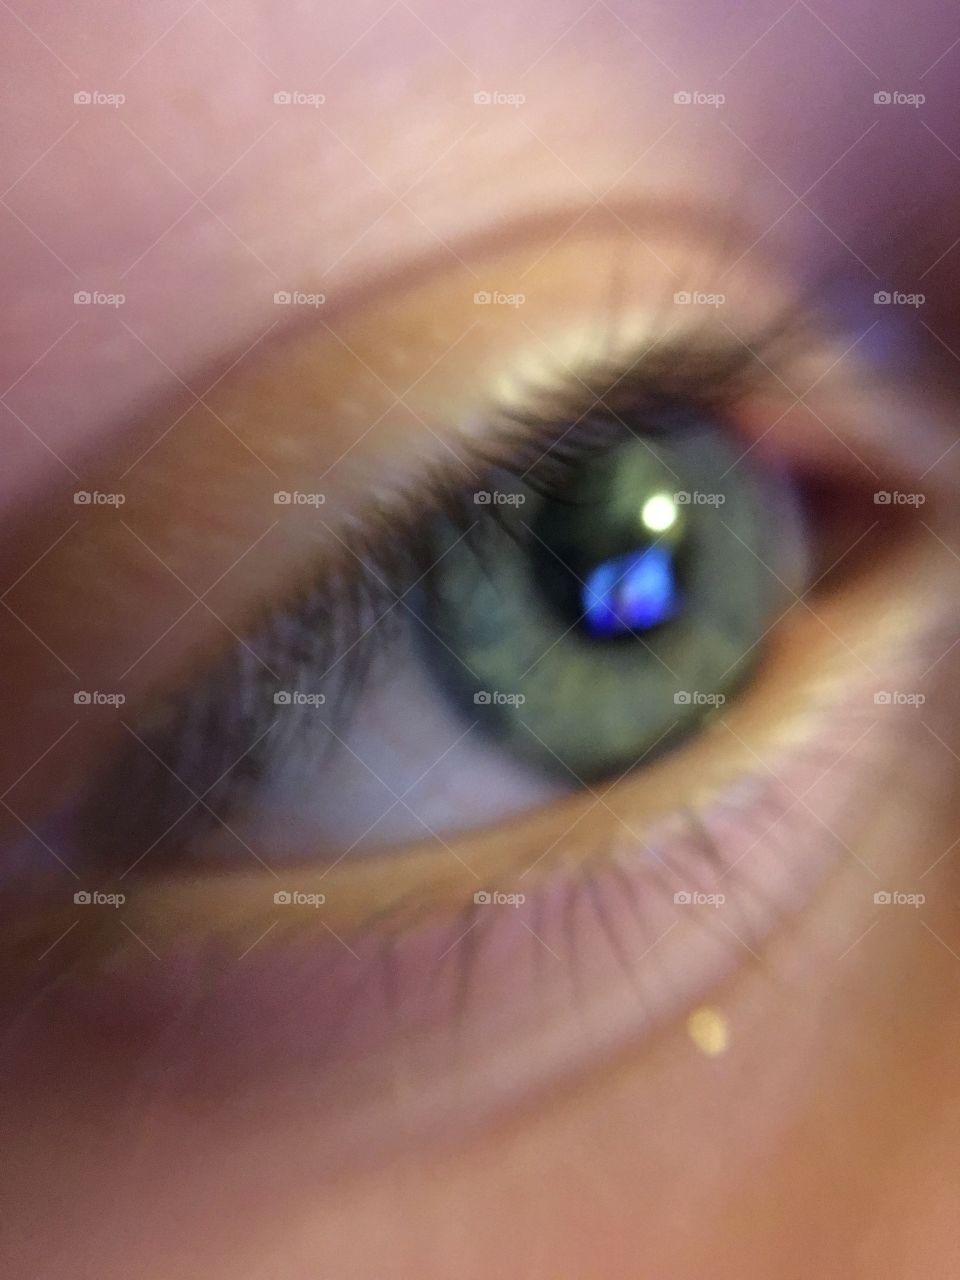 A blurry eye